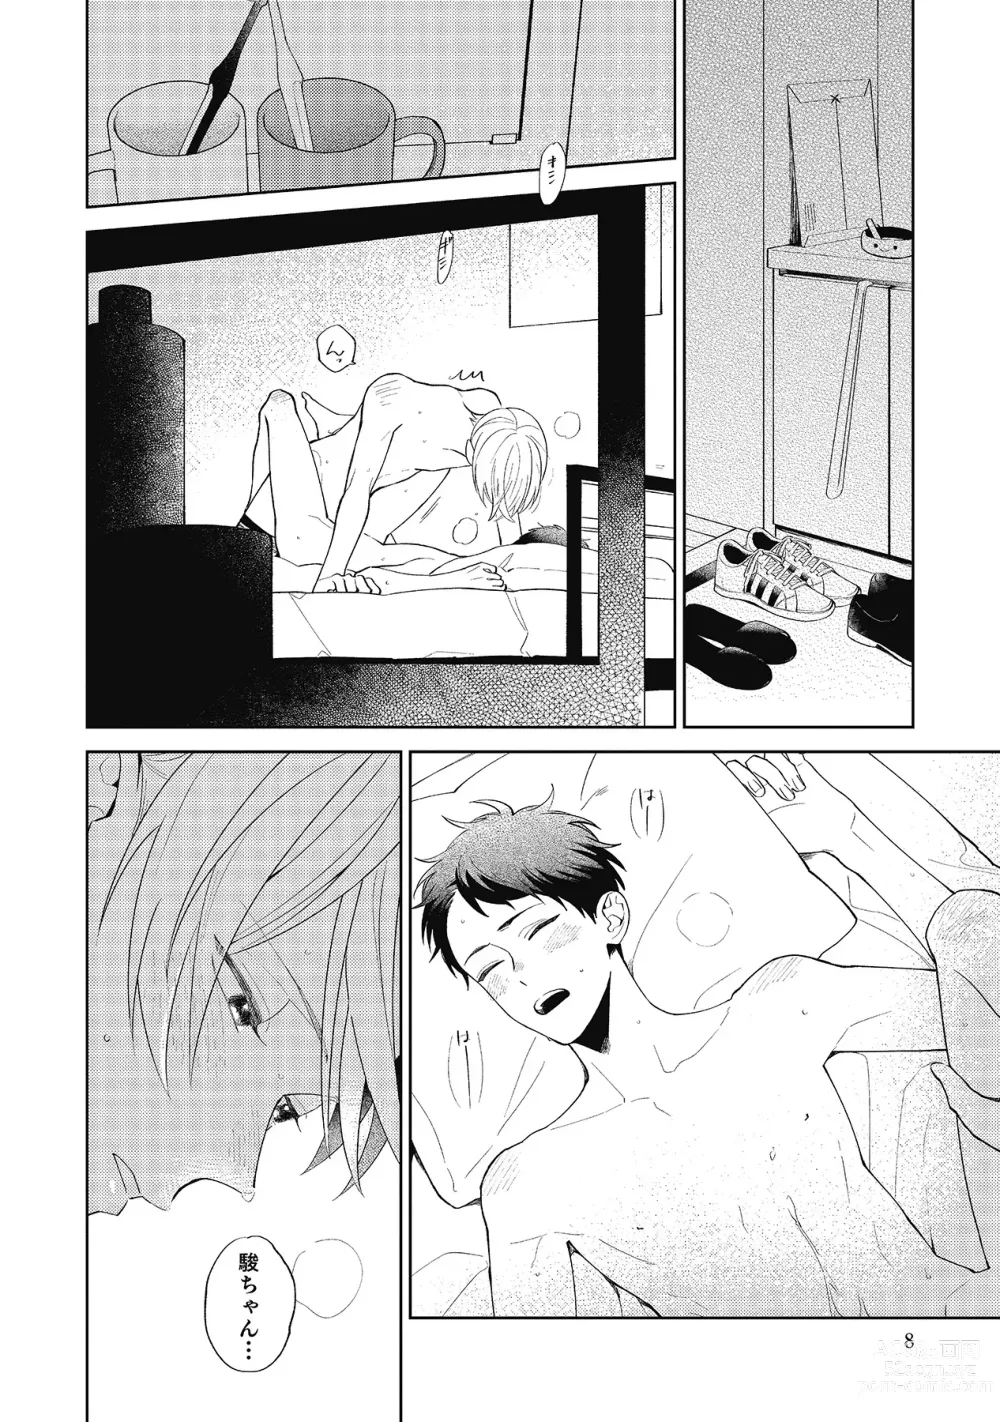 Page 8 of manga Sentimental Darling